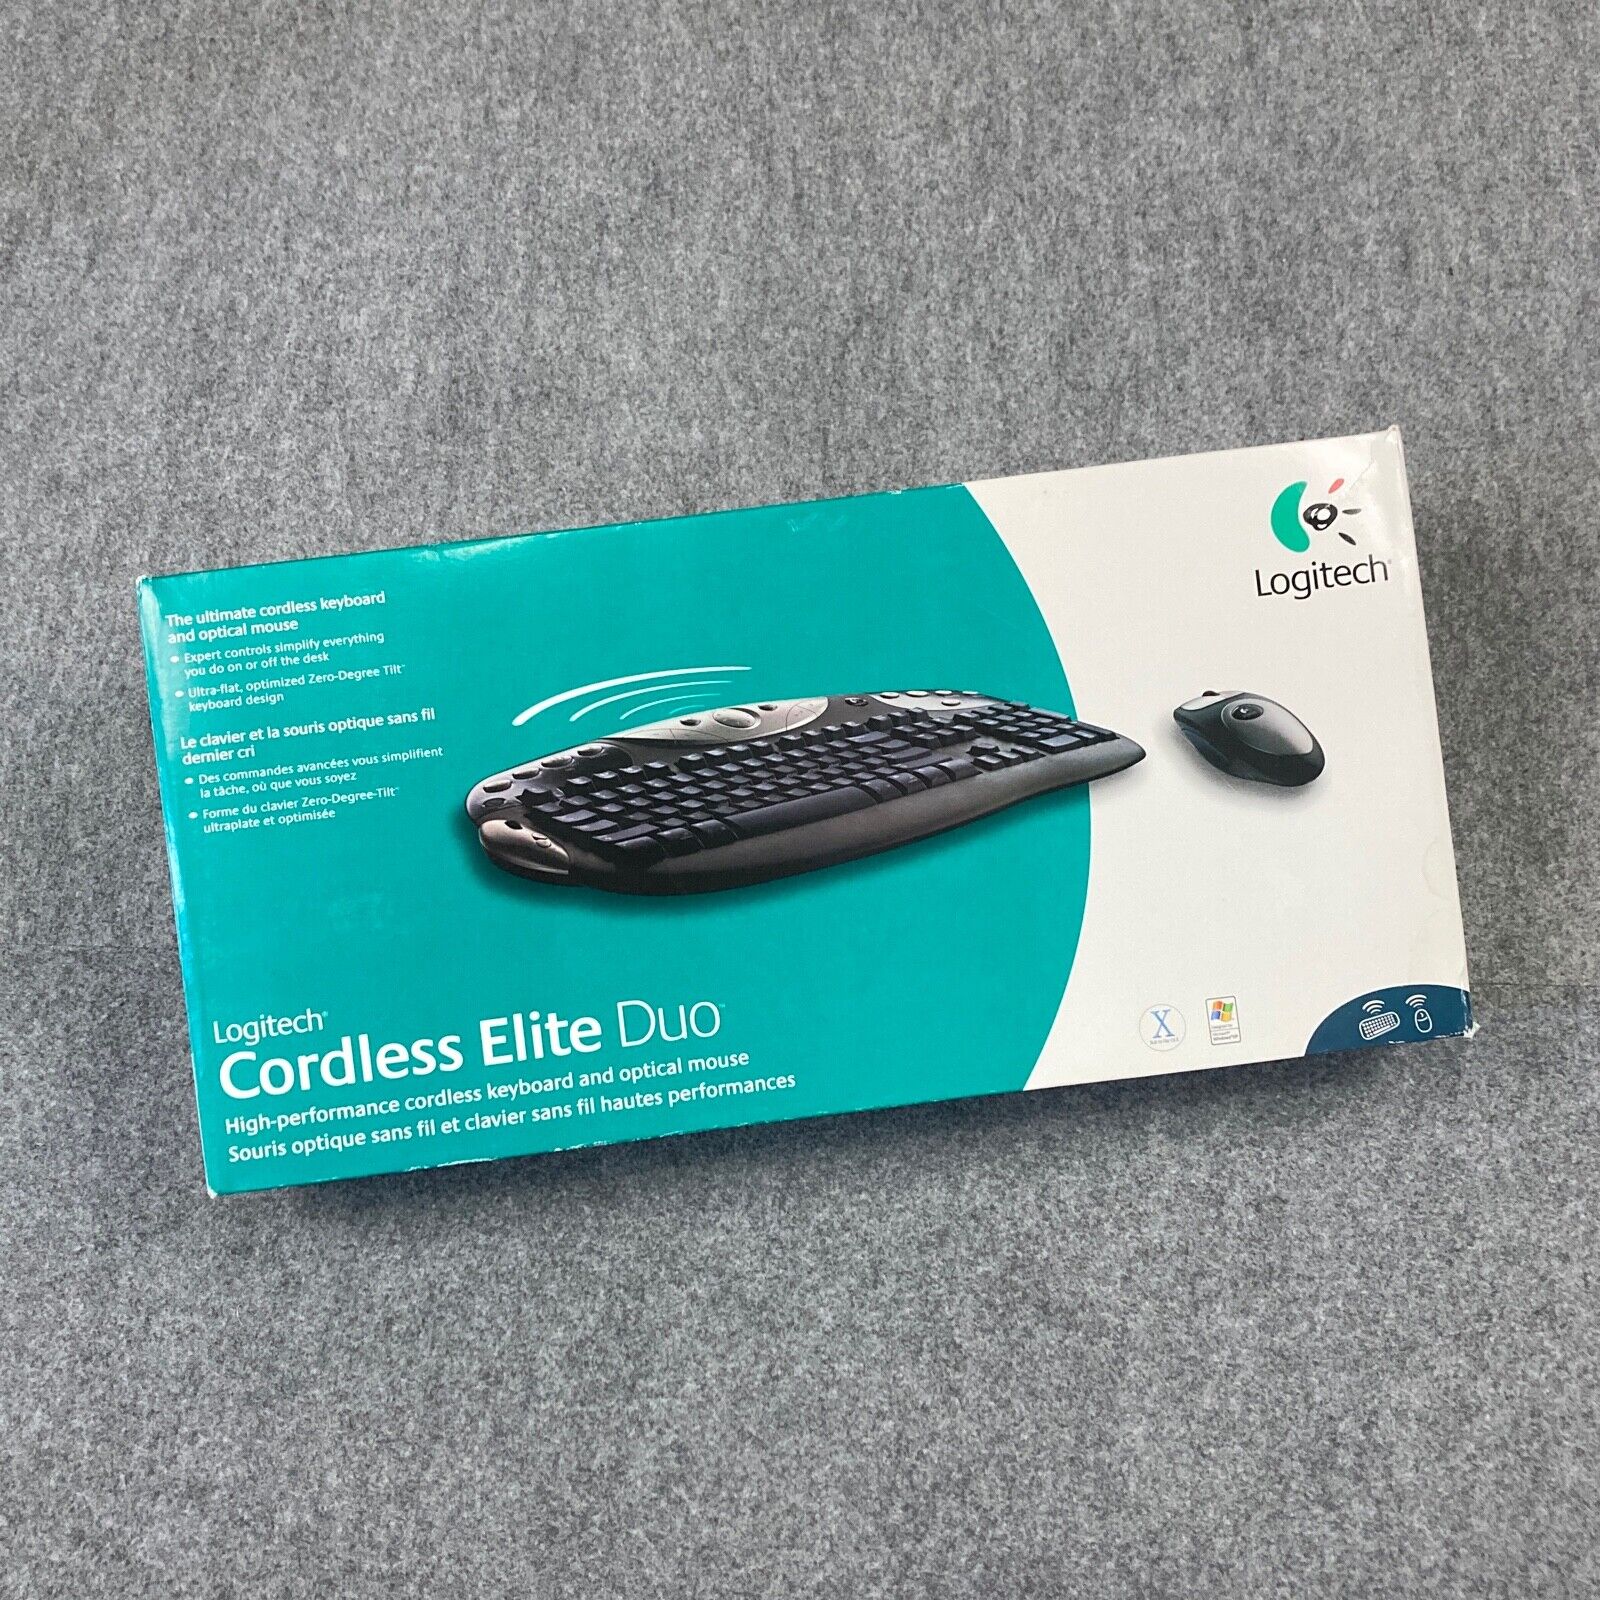 Logitech Keyboard Cordless Elite Duo PC USB PS/2 Unused Open Box